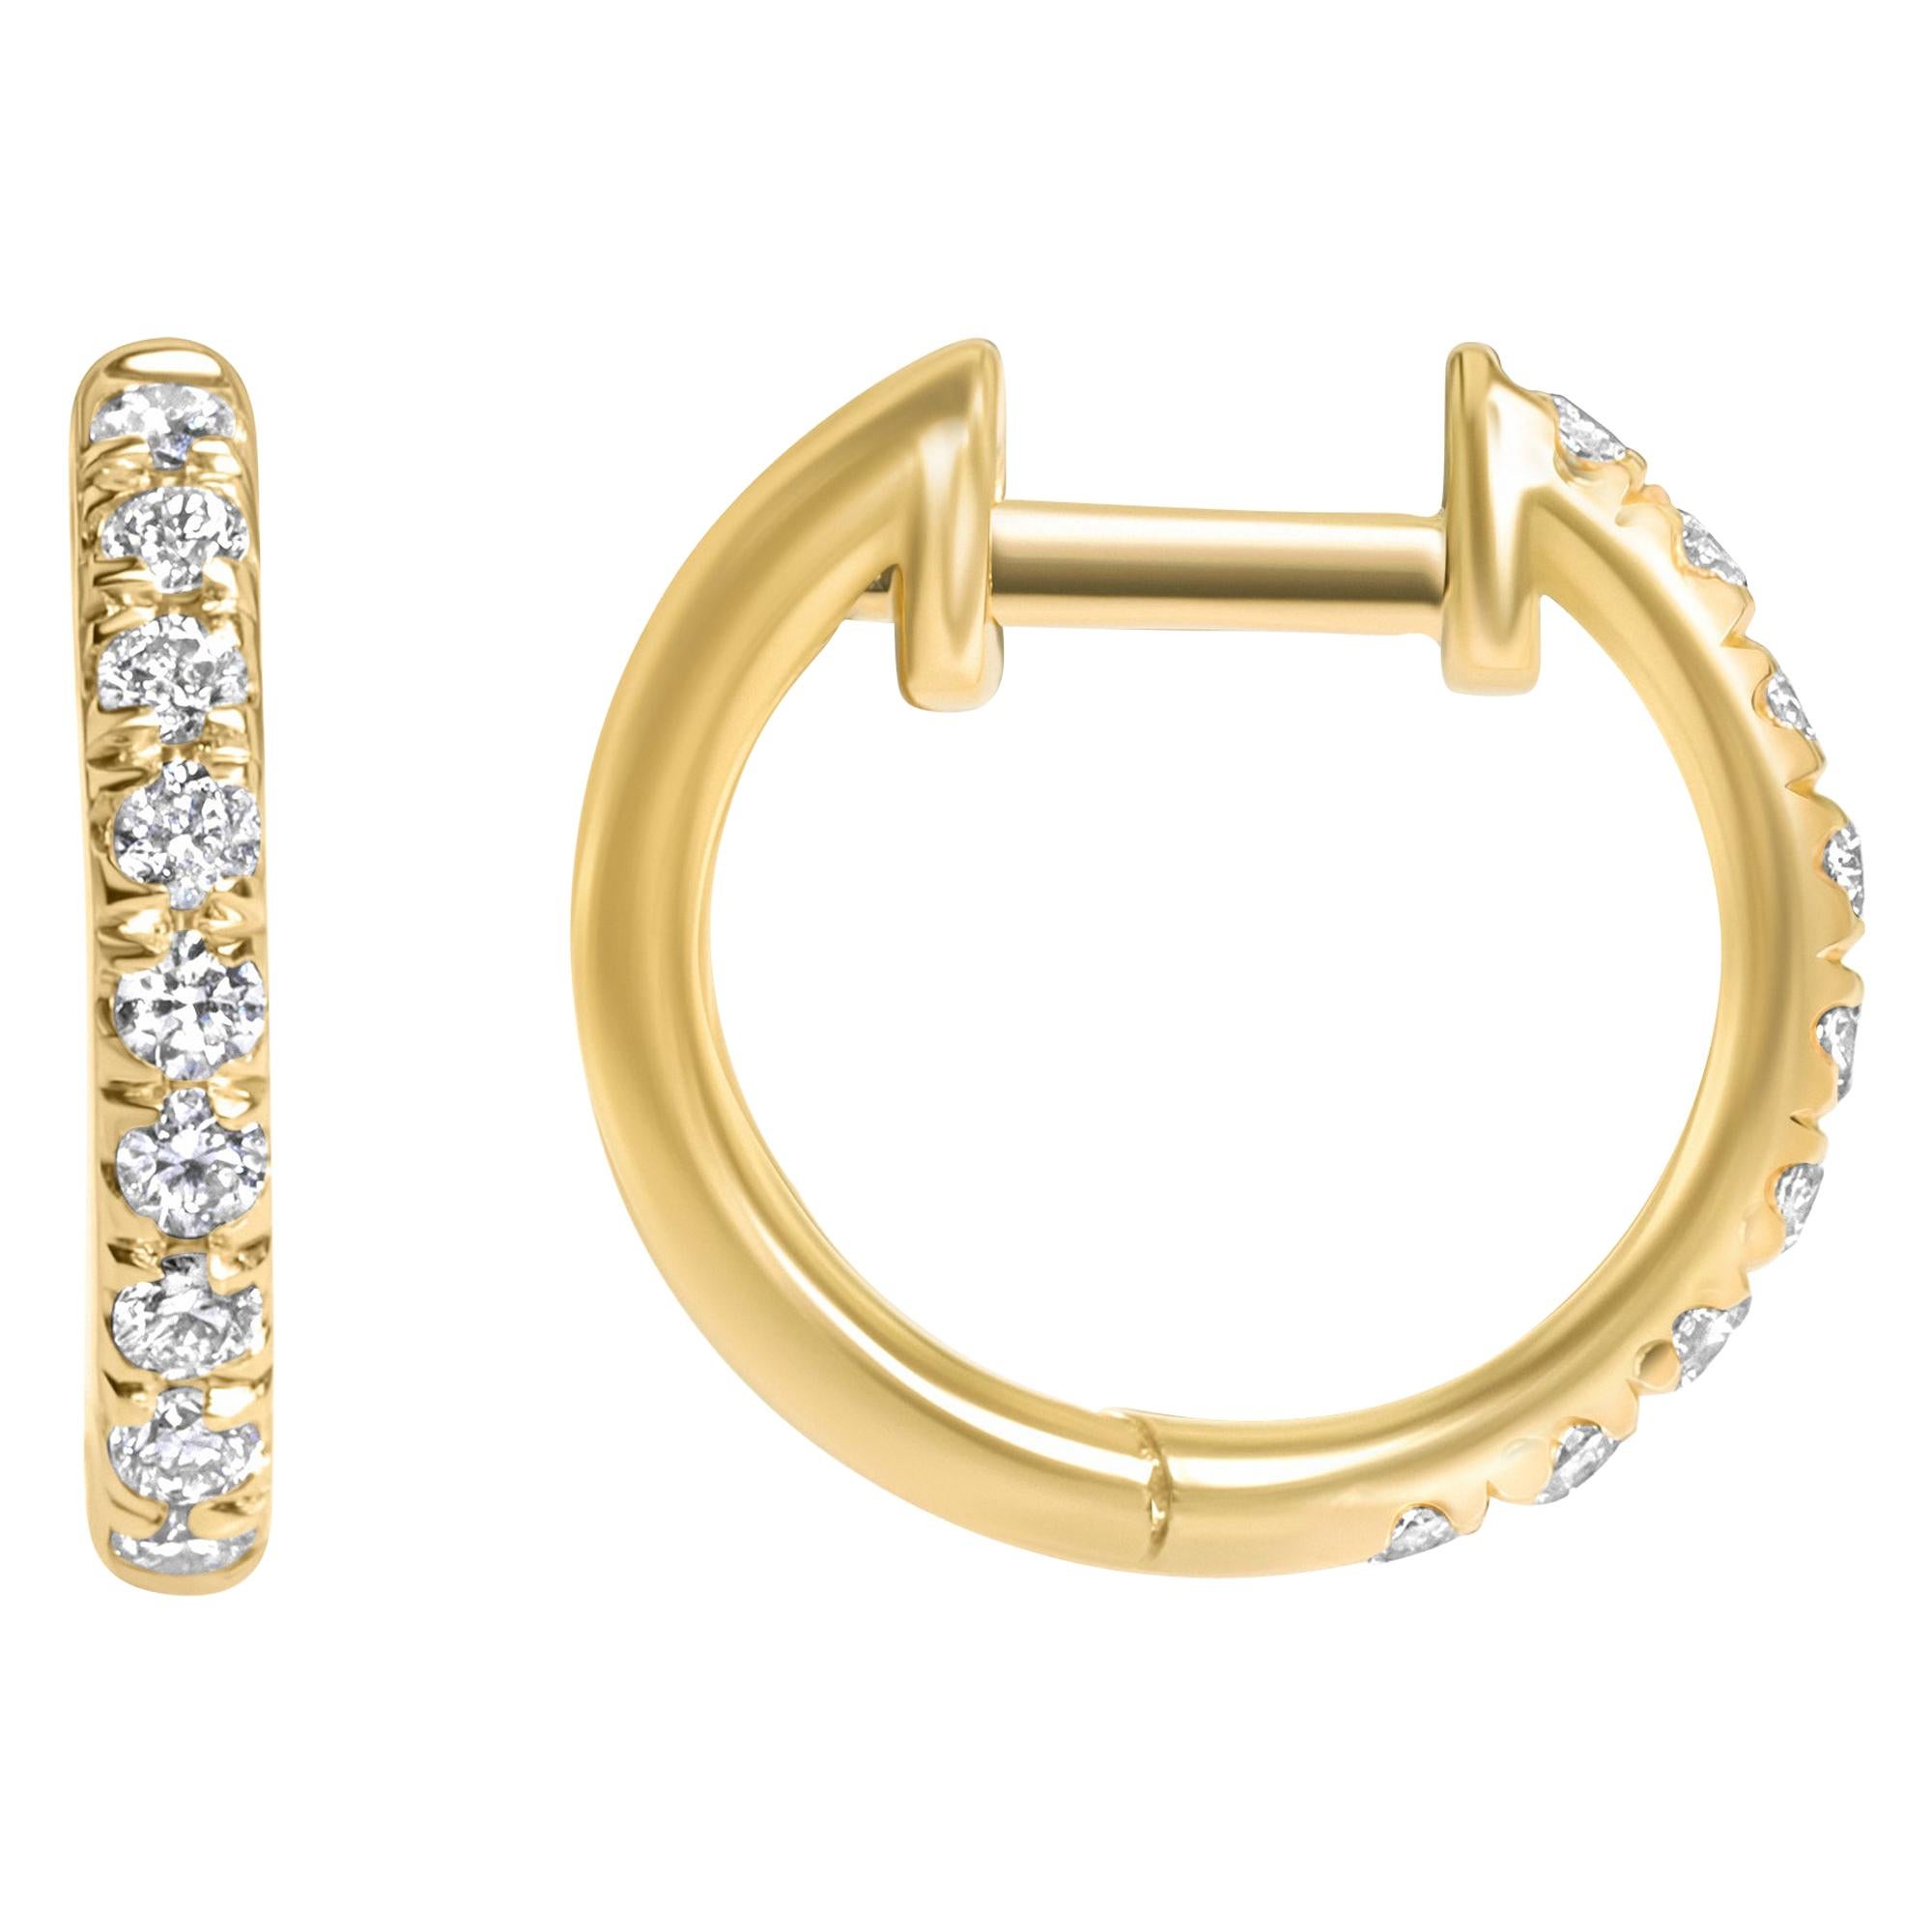 0.27 Carat Lori Diamond Hoop Earrings in 14 Karat Yellow Gold - Shlomit Rogel